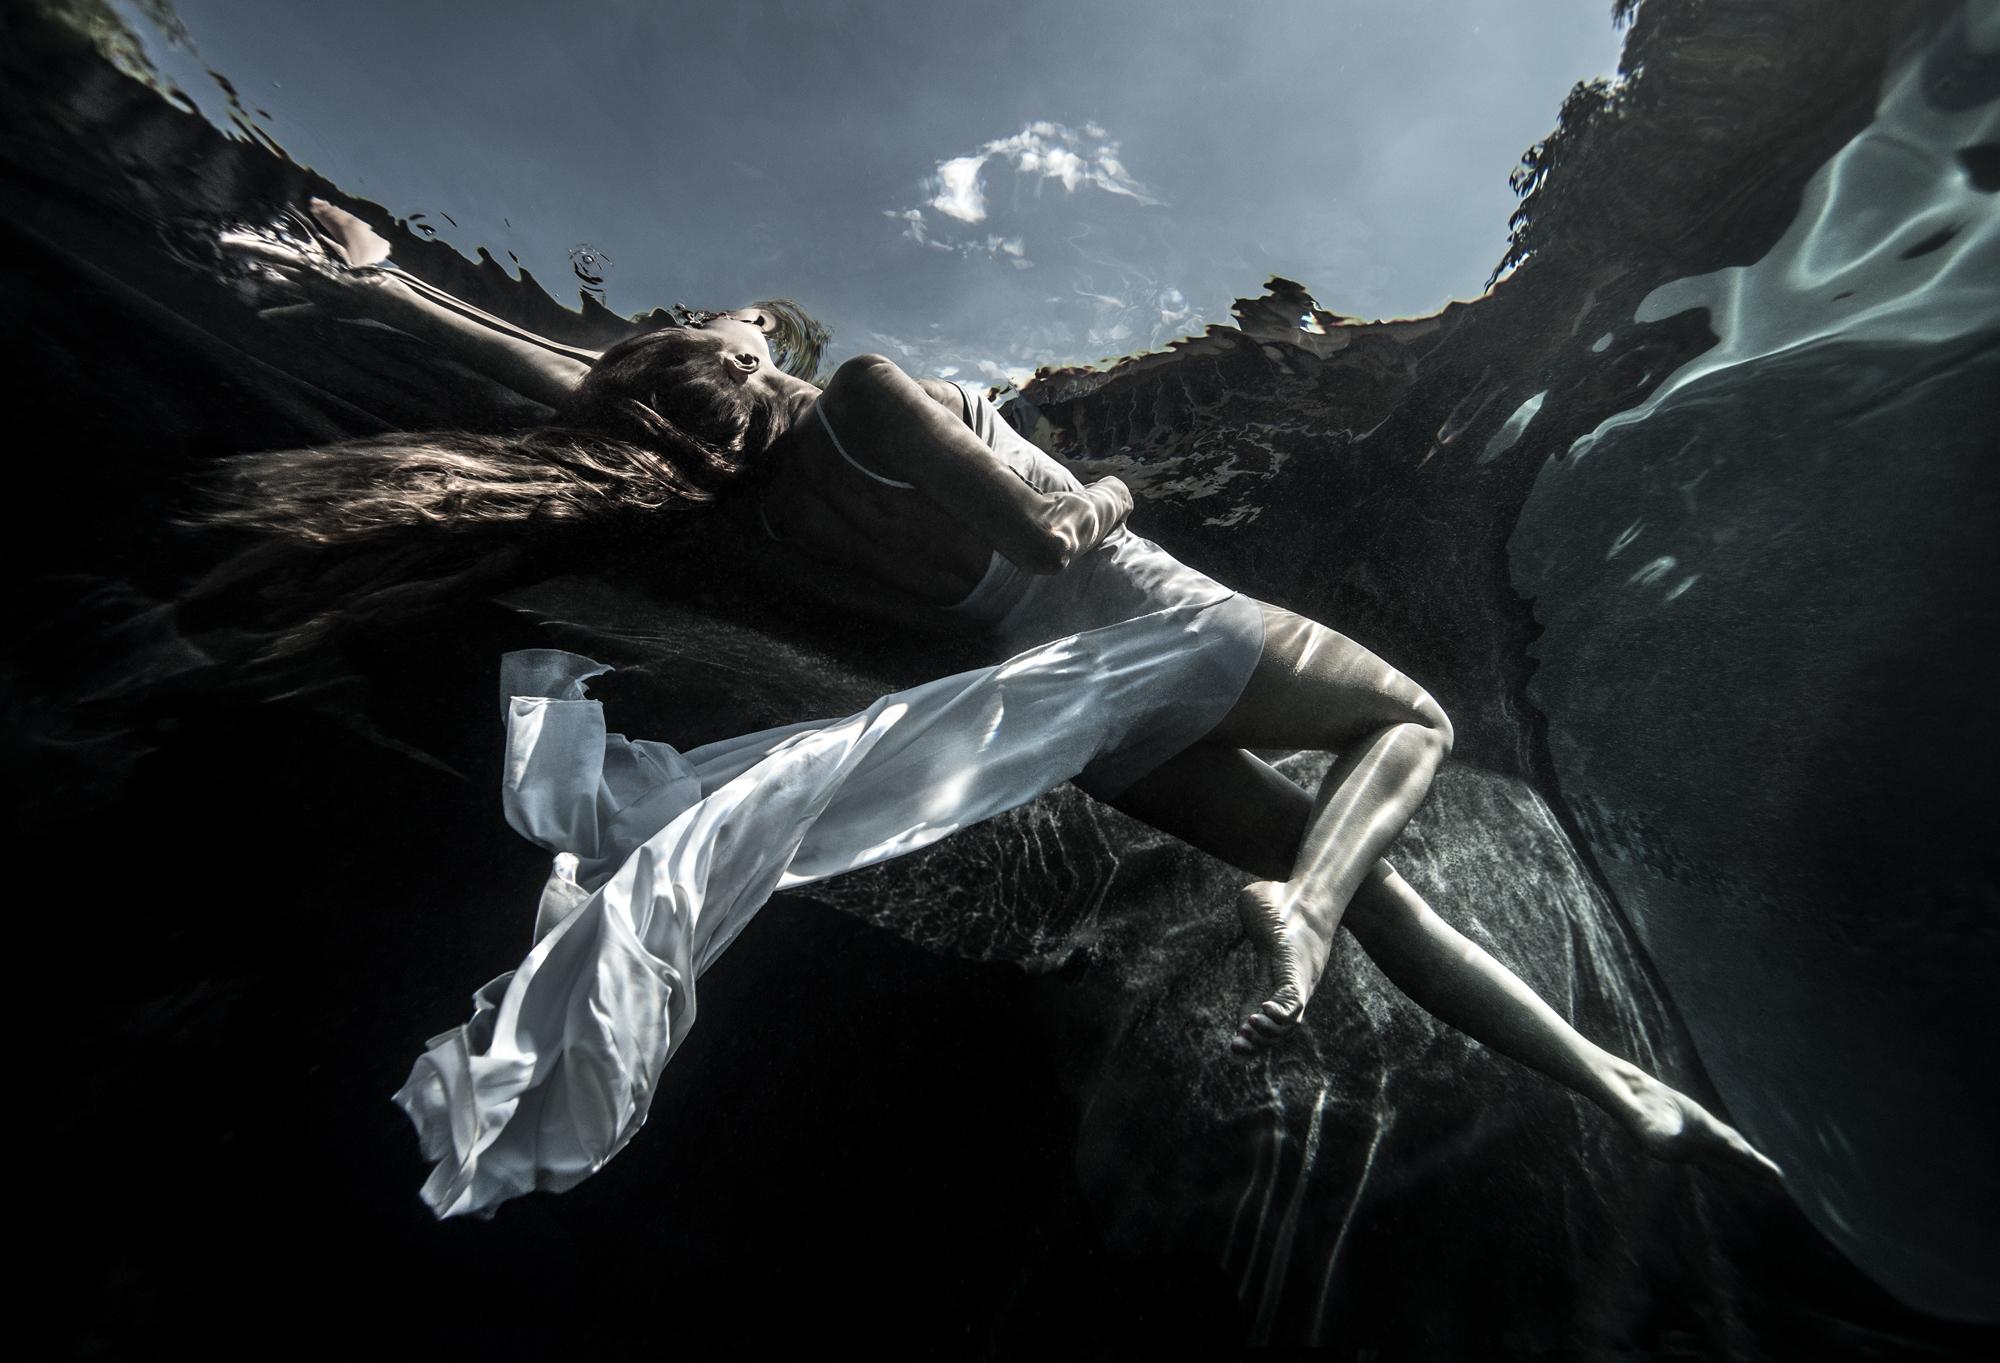 Alex Sher Figurative Photograph - Sky Dance - underwater black& white photograph - archival pigment print 24"x35"